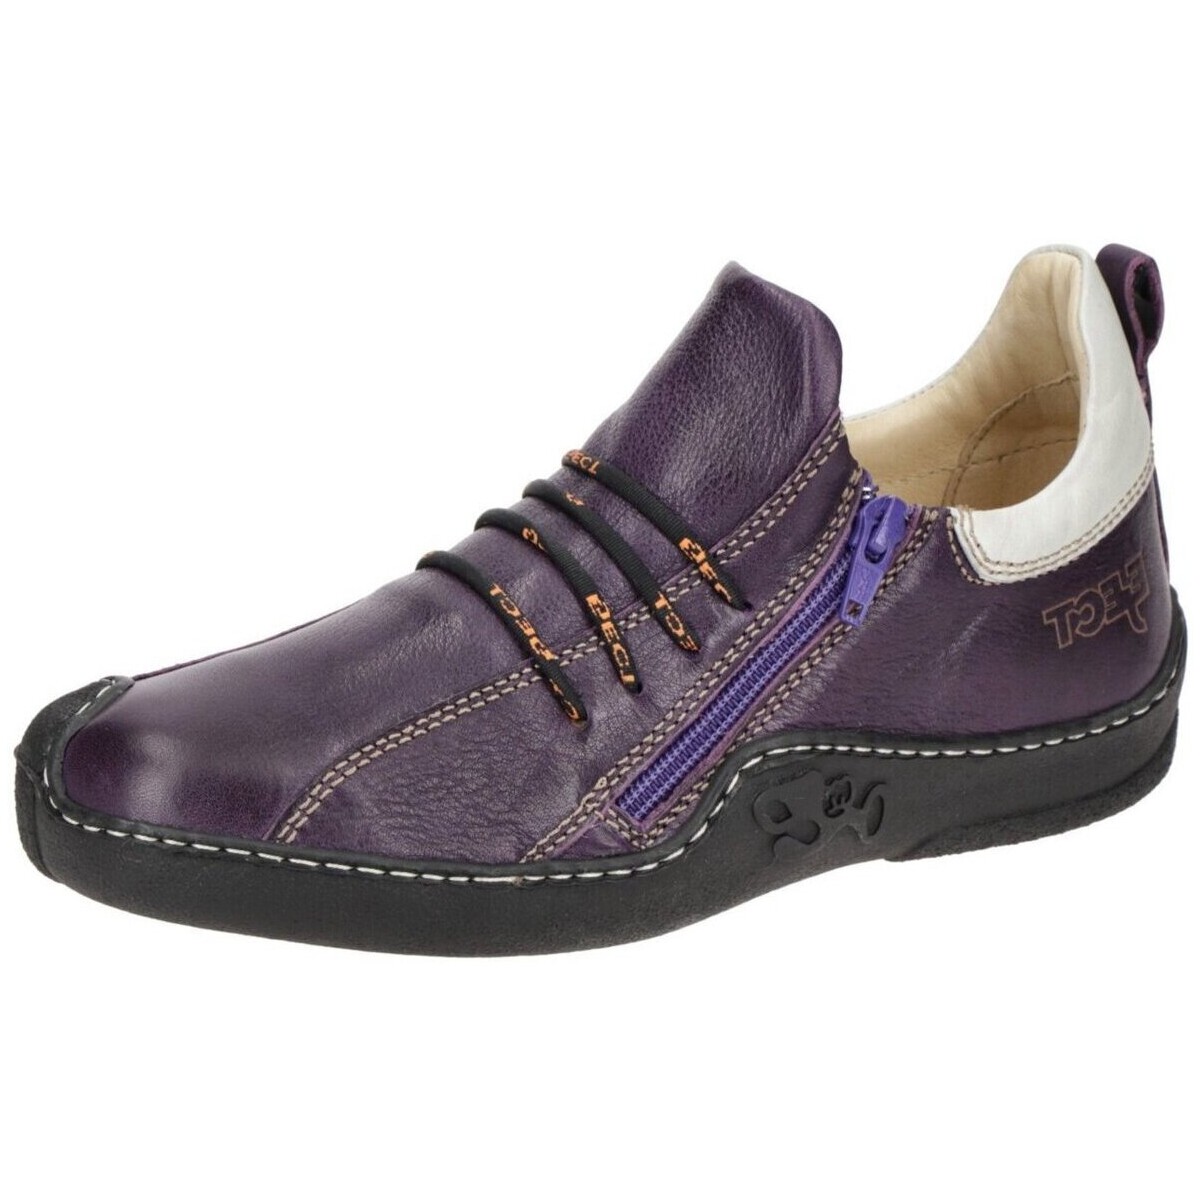 Schuhe Damen Slipper Eject Slipper Skat Schuhe Slipper 20710 20710 Violett